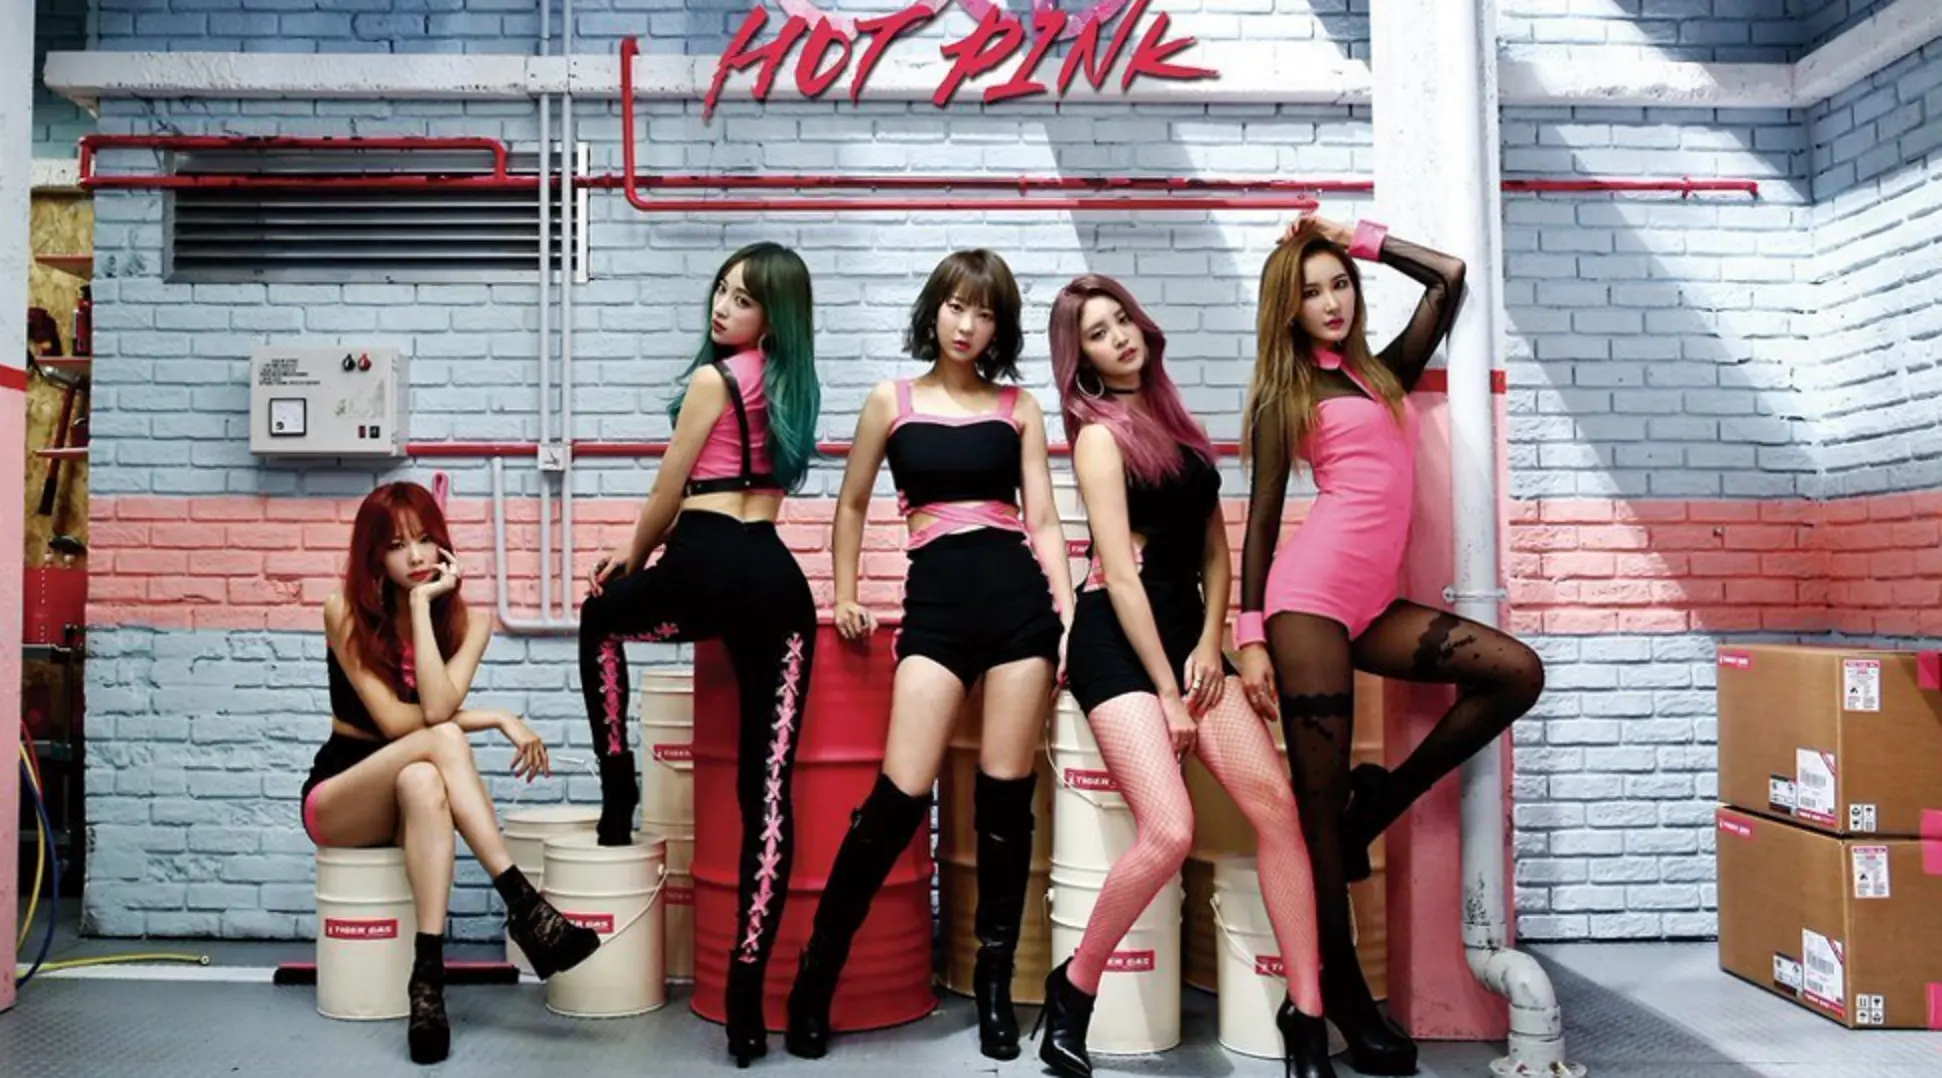 Sungguh mengejutkan, videoklip yang diusung girlband K-Pop ini seolah menggambarkan proses prostitusi.